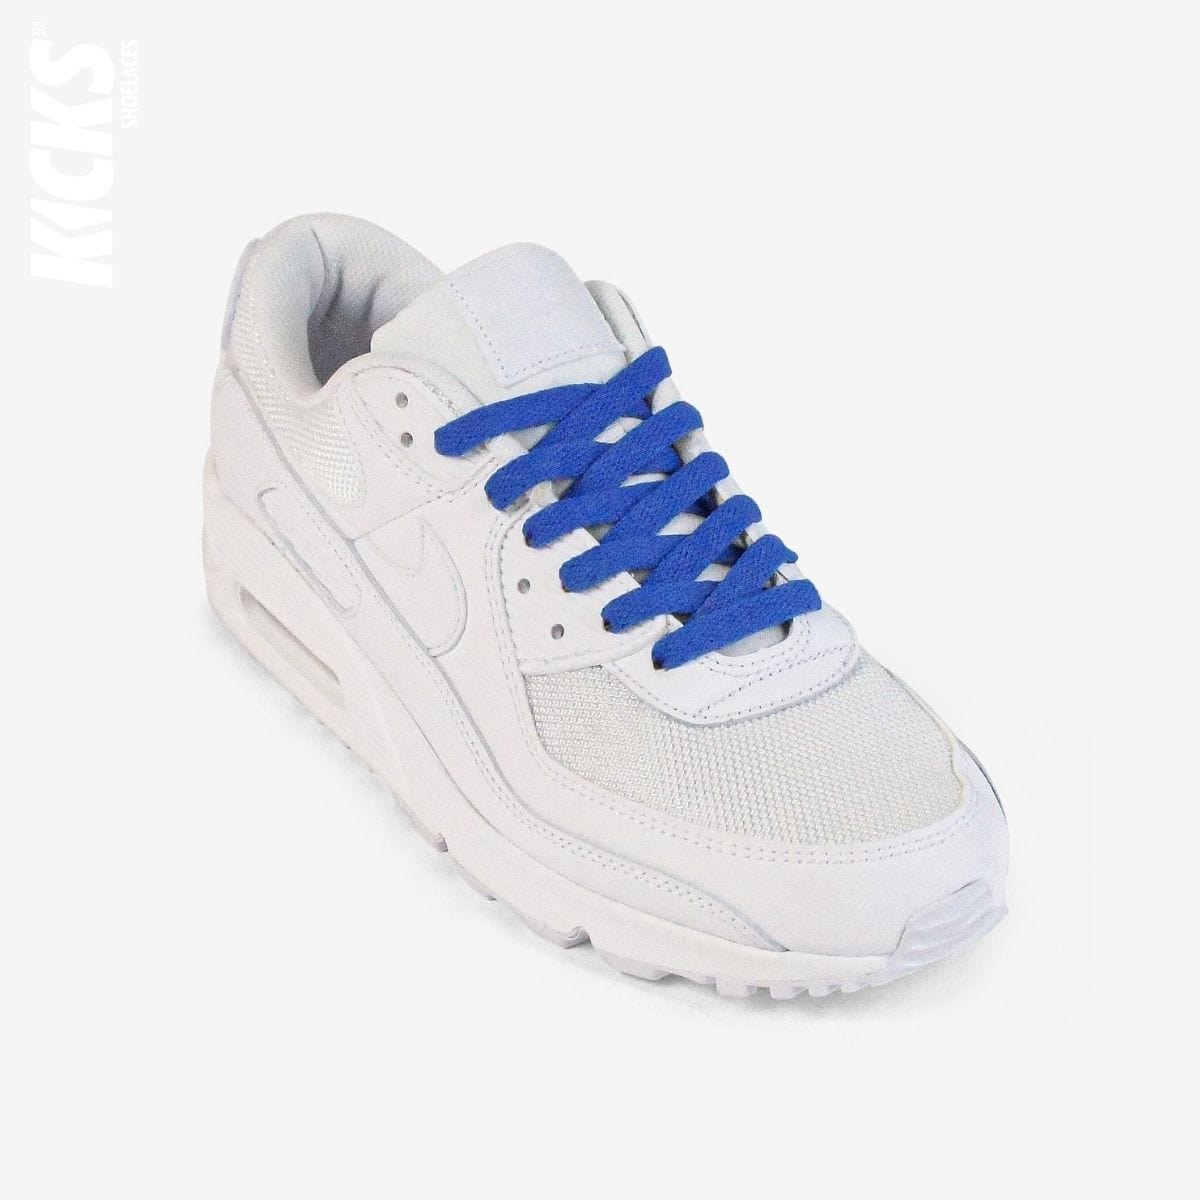 novelty-shoelaces-on-white-sneaker-using-kids-royal-blue-flat-shoelaces